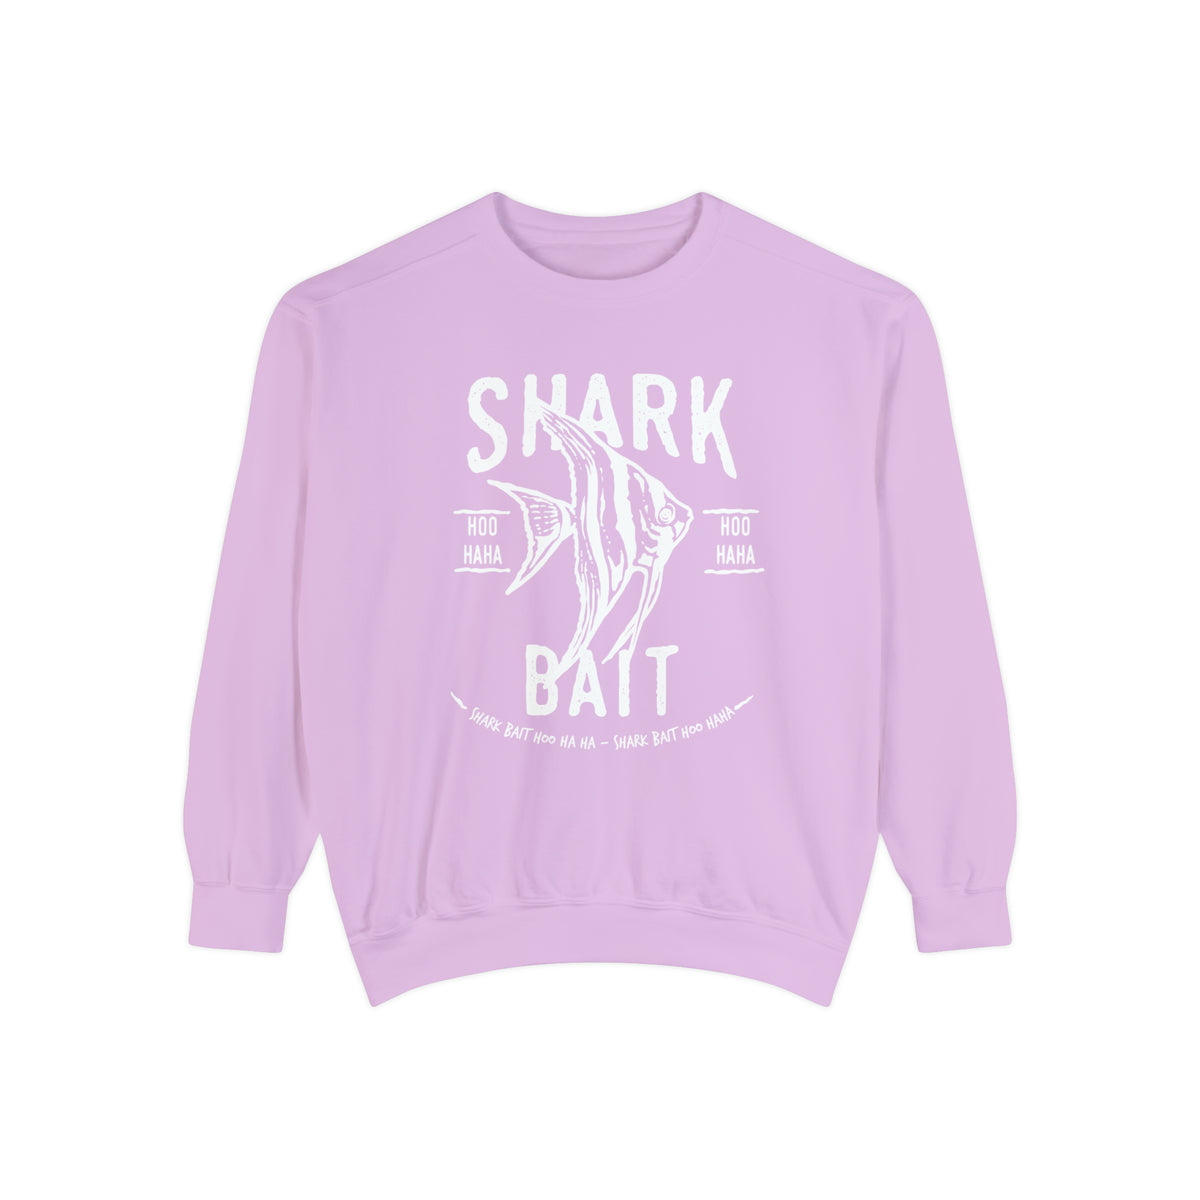 Shark Bait Hoo Haha Comfort Colors Unisex Garment-Dyed Sweatshirt